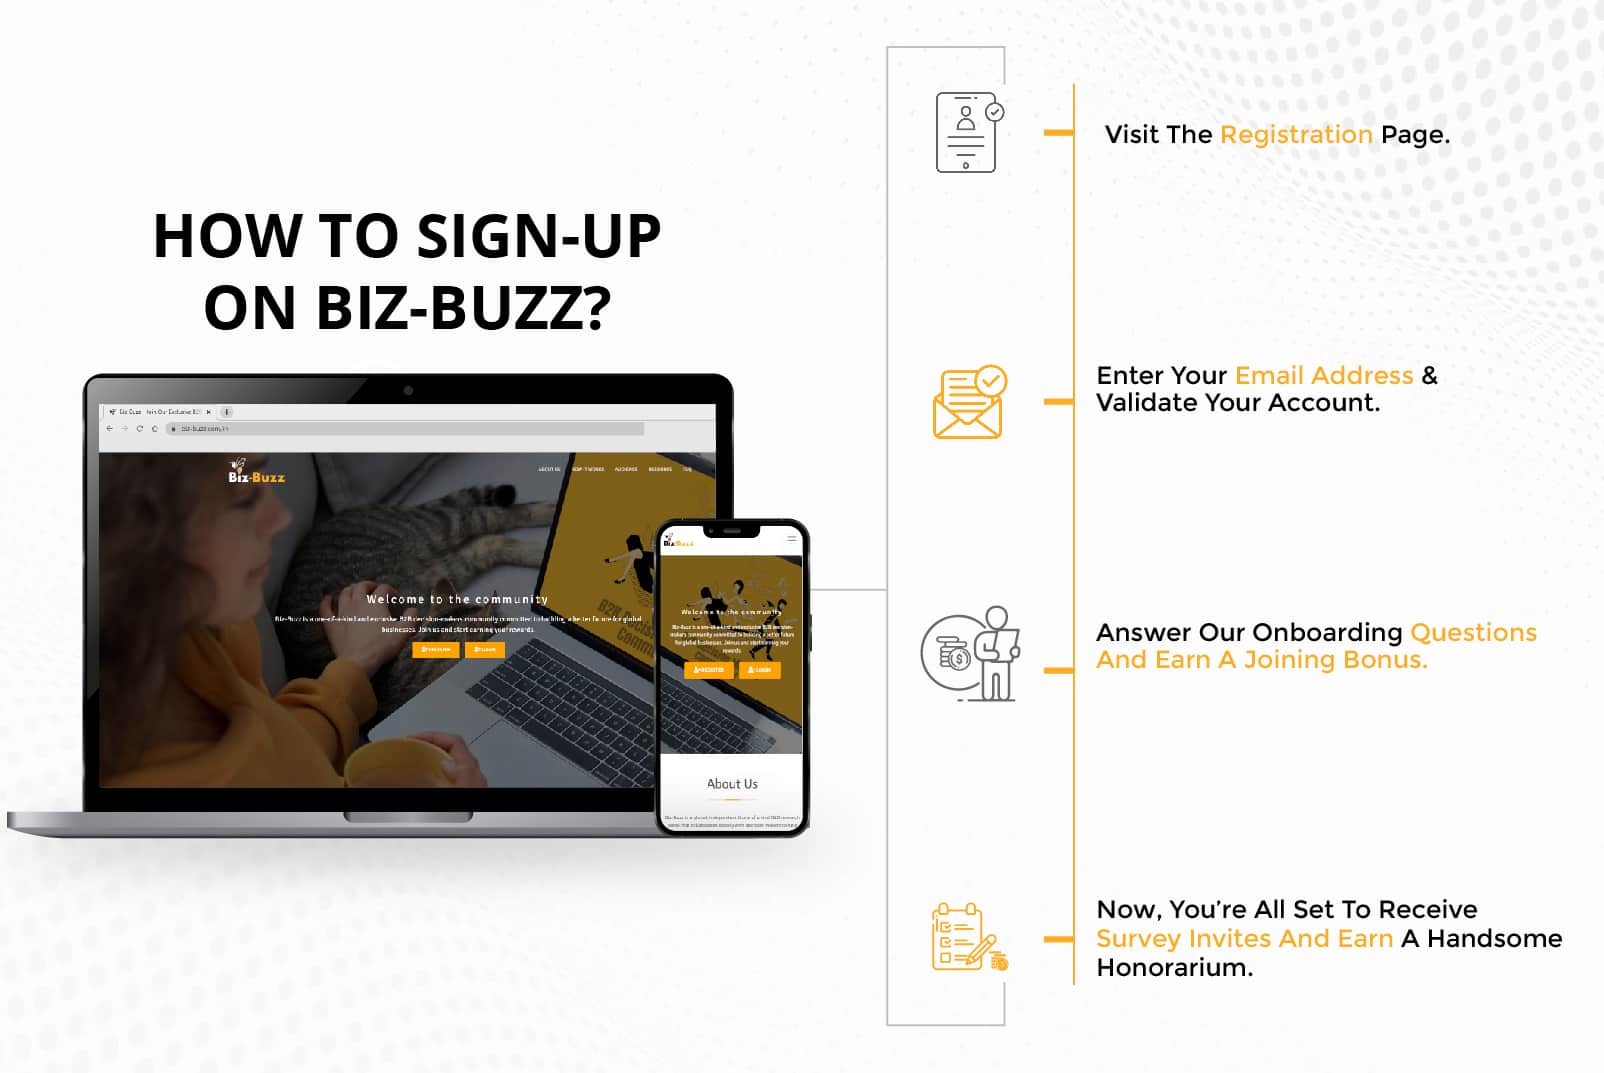 sign-up on Biz-Buzz